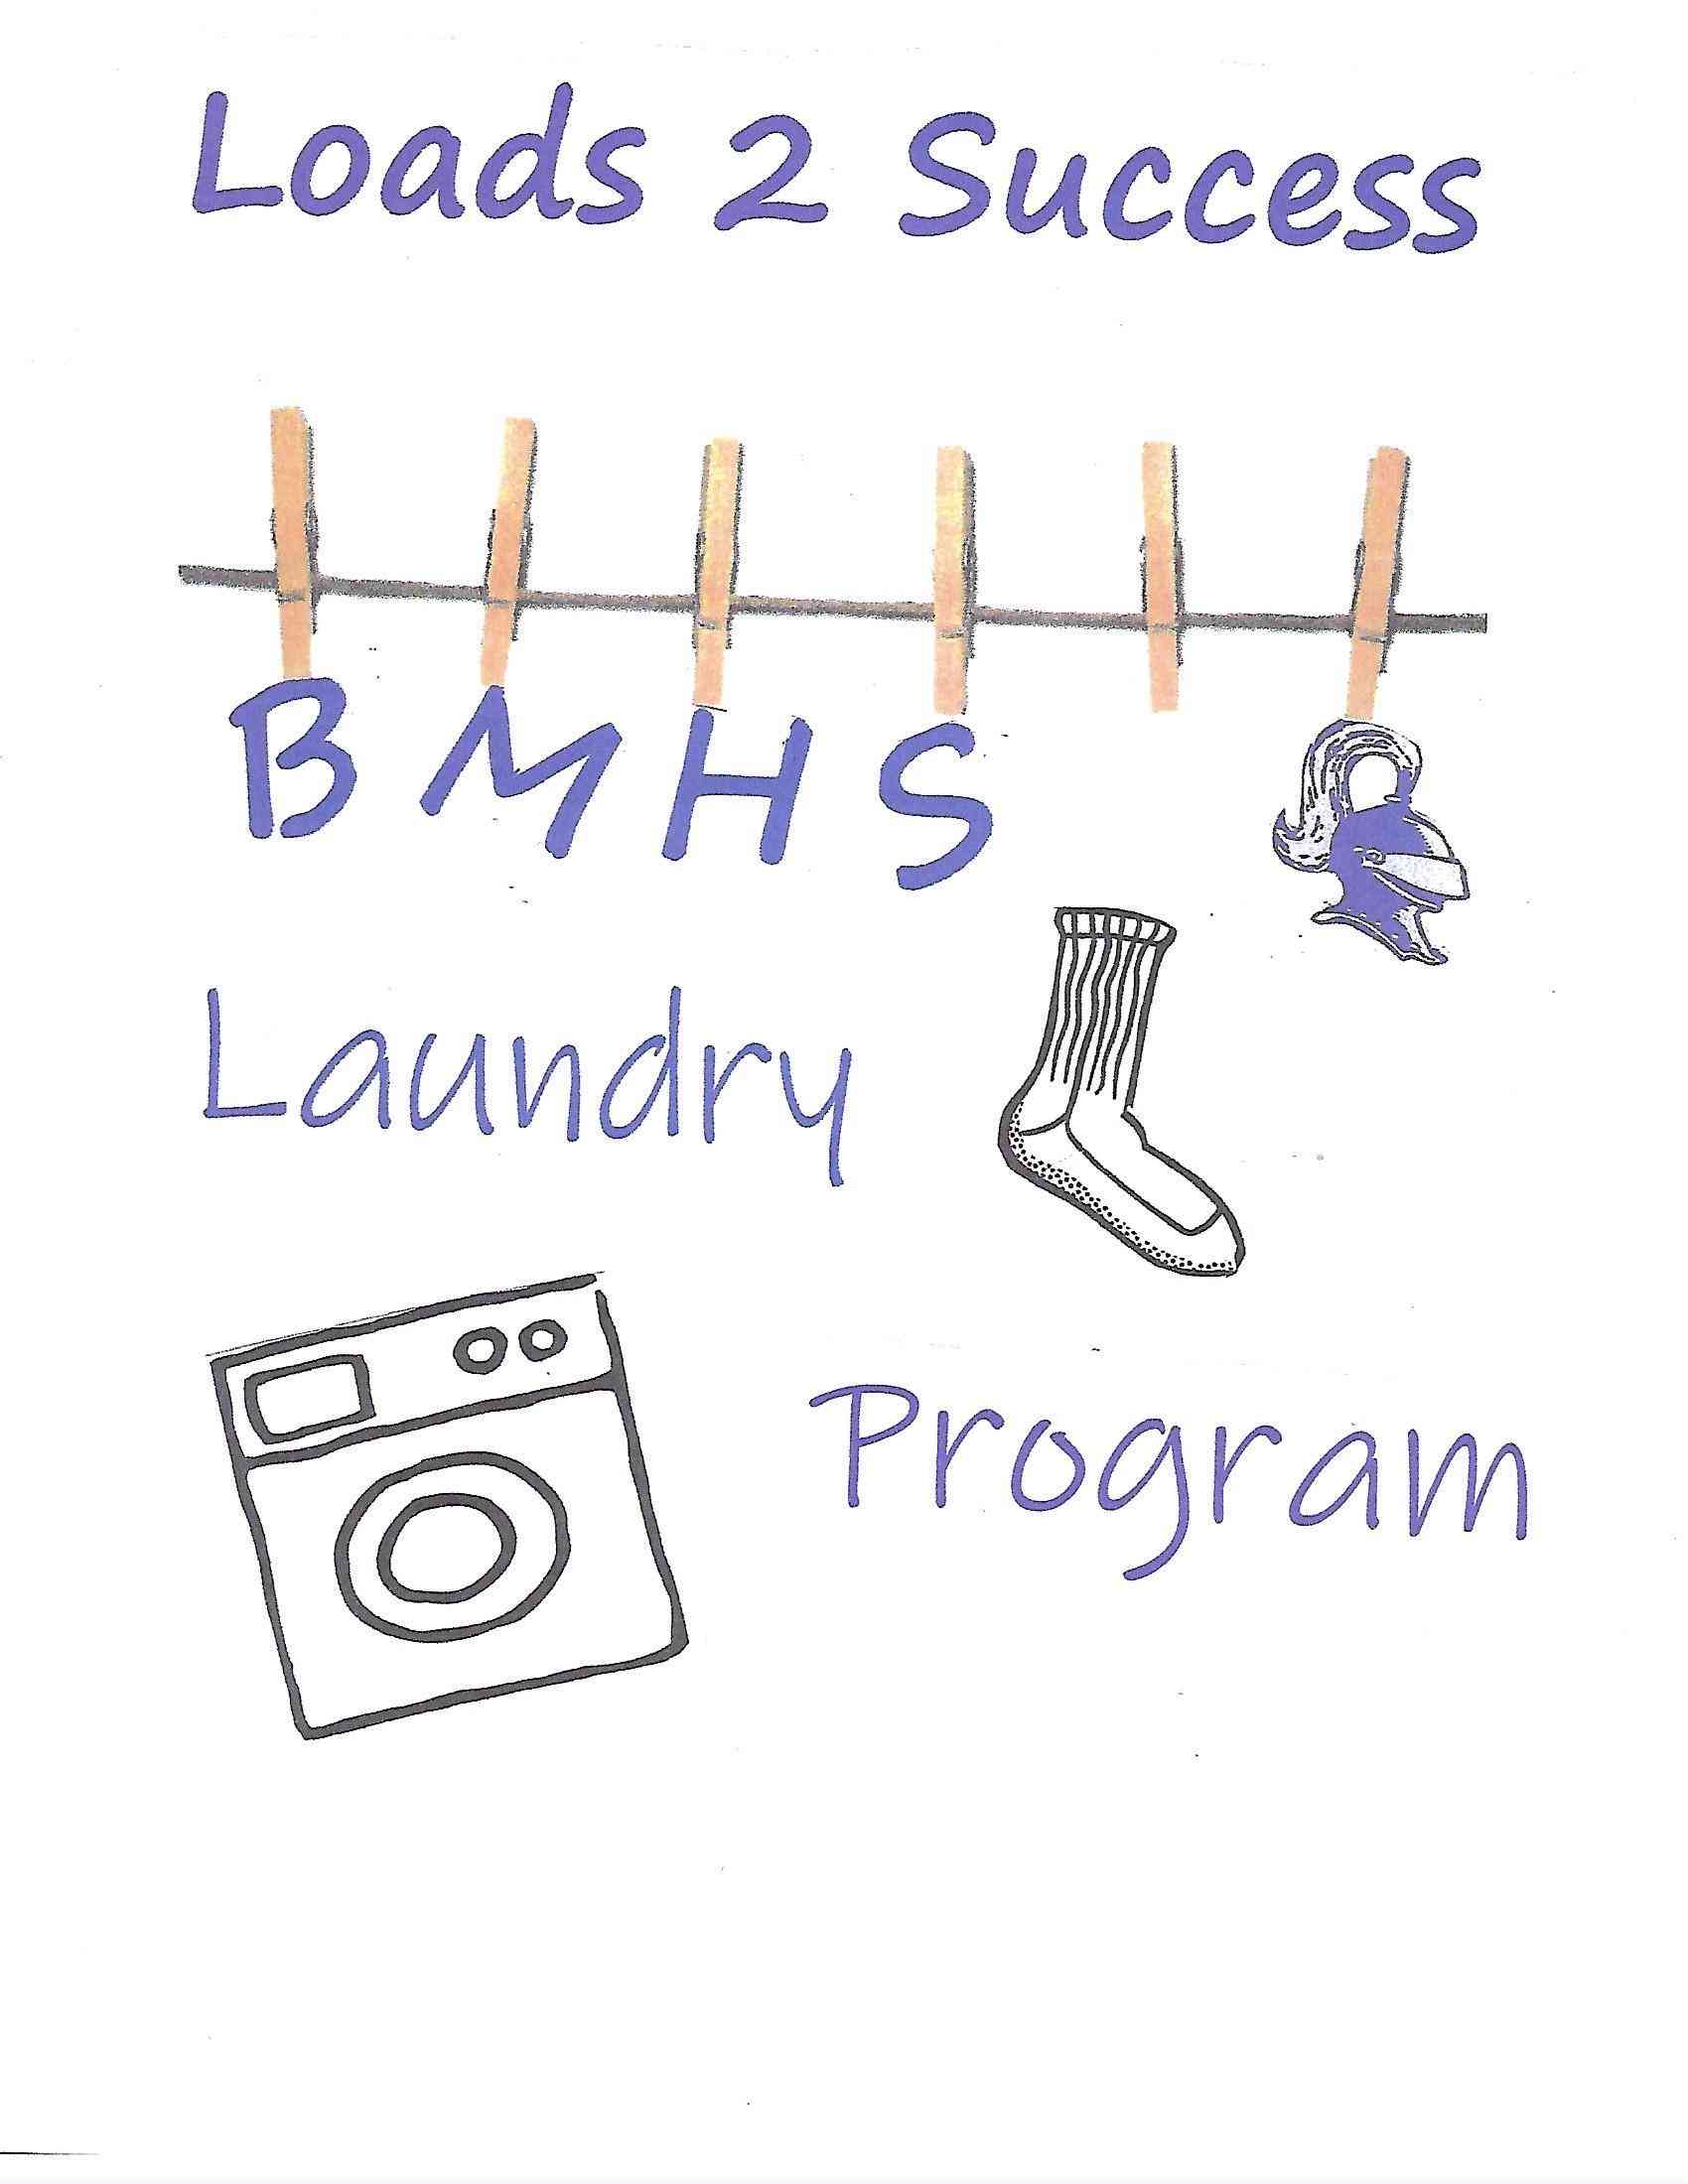 Loads to Success- Laundry program Image